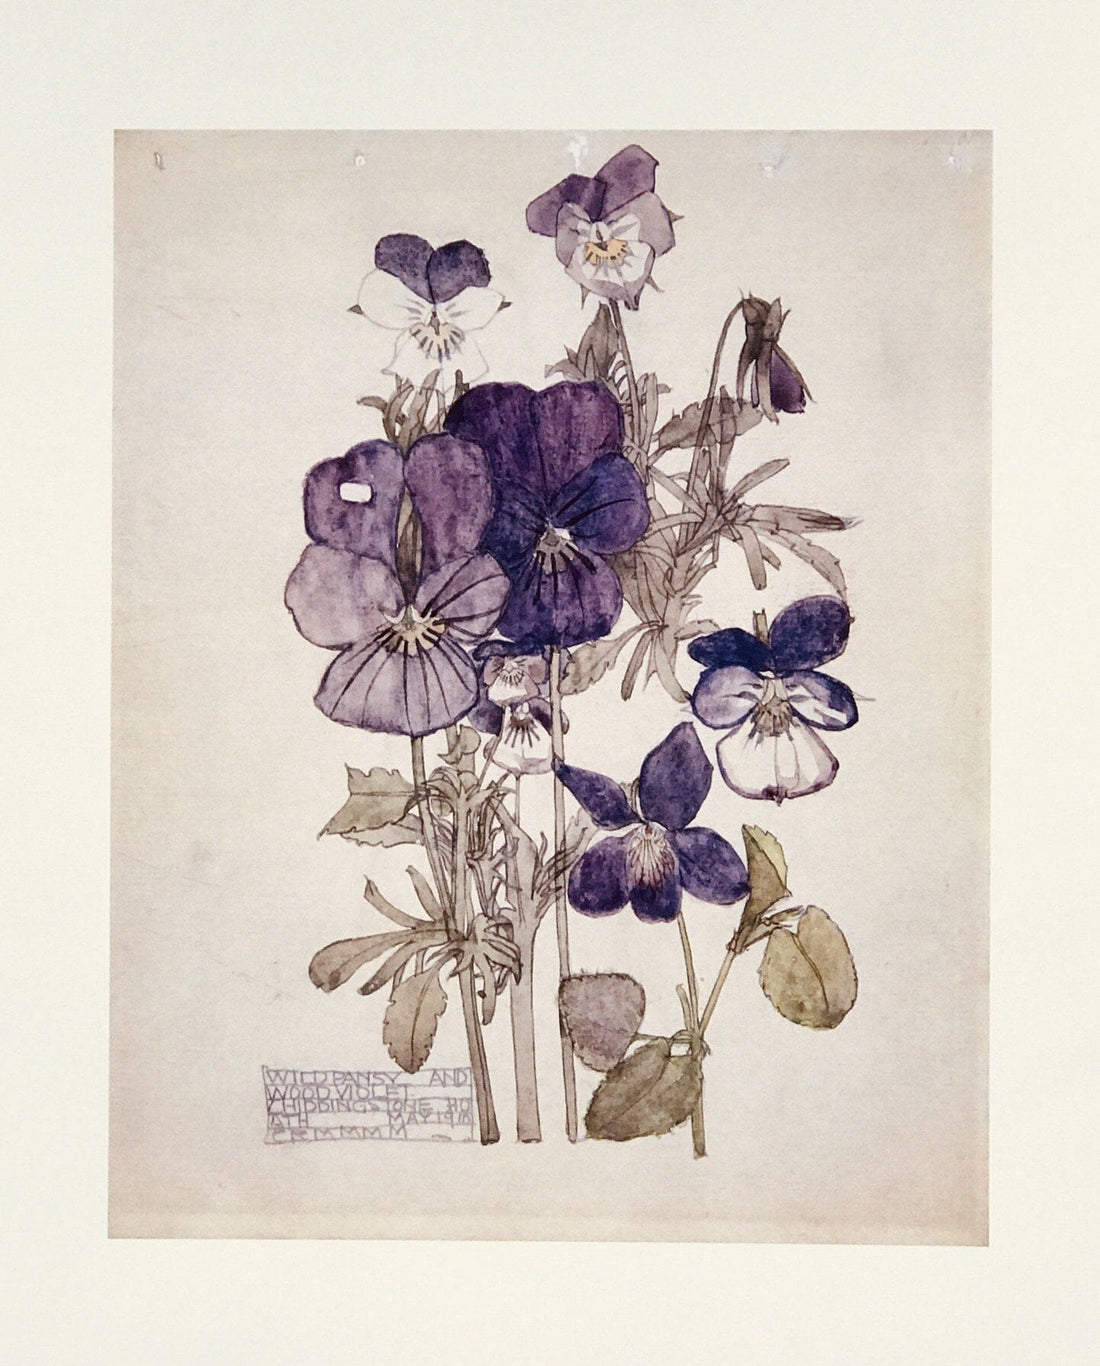 Charles Rennie Mackintosh: A Pioneer of Art Nouveau